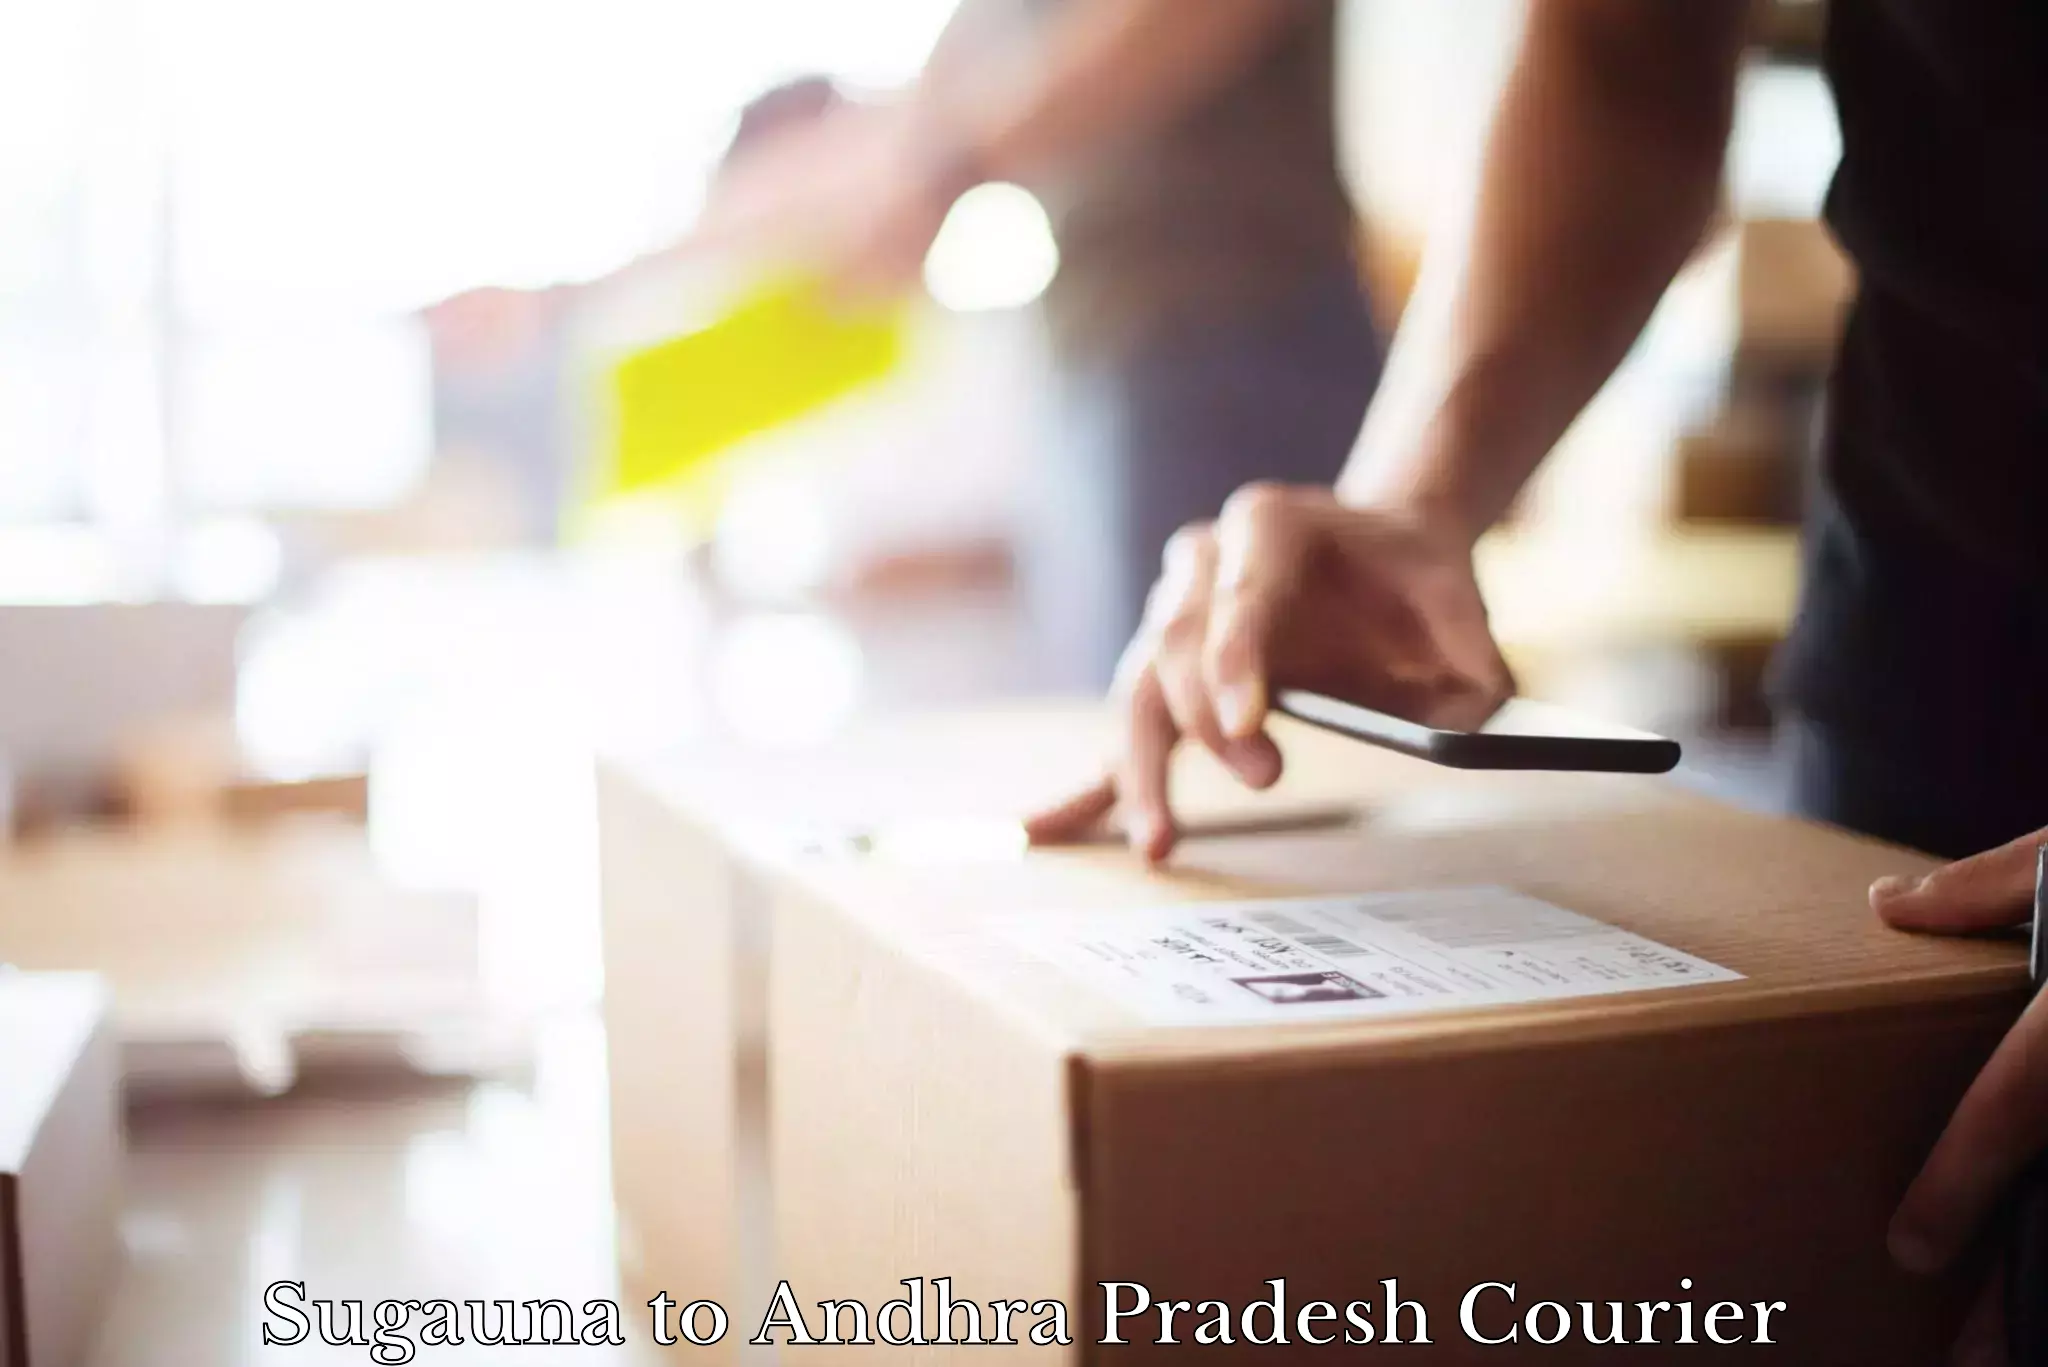 Next-day delivery options Sugauna to Andhra Pradesh